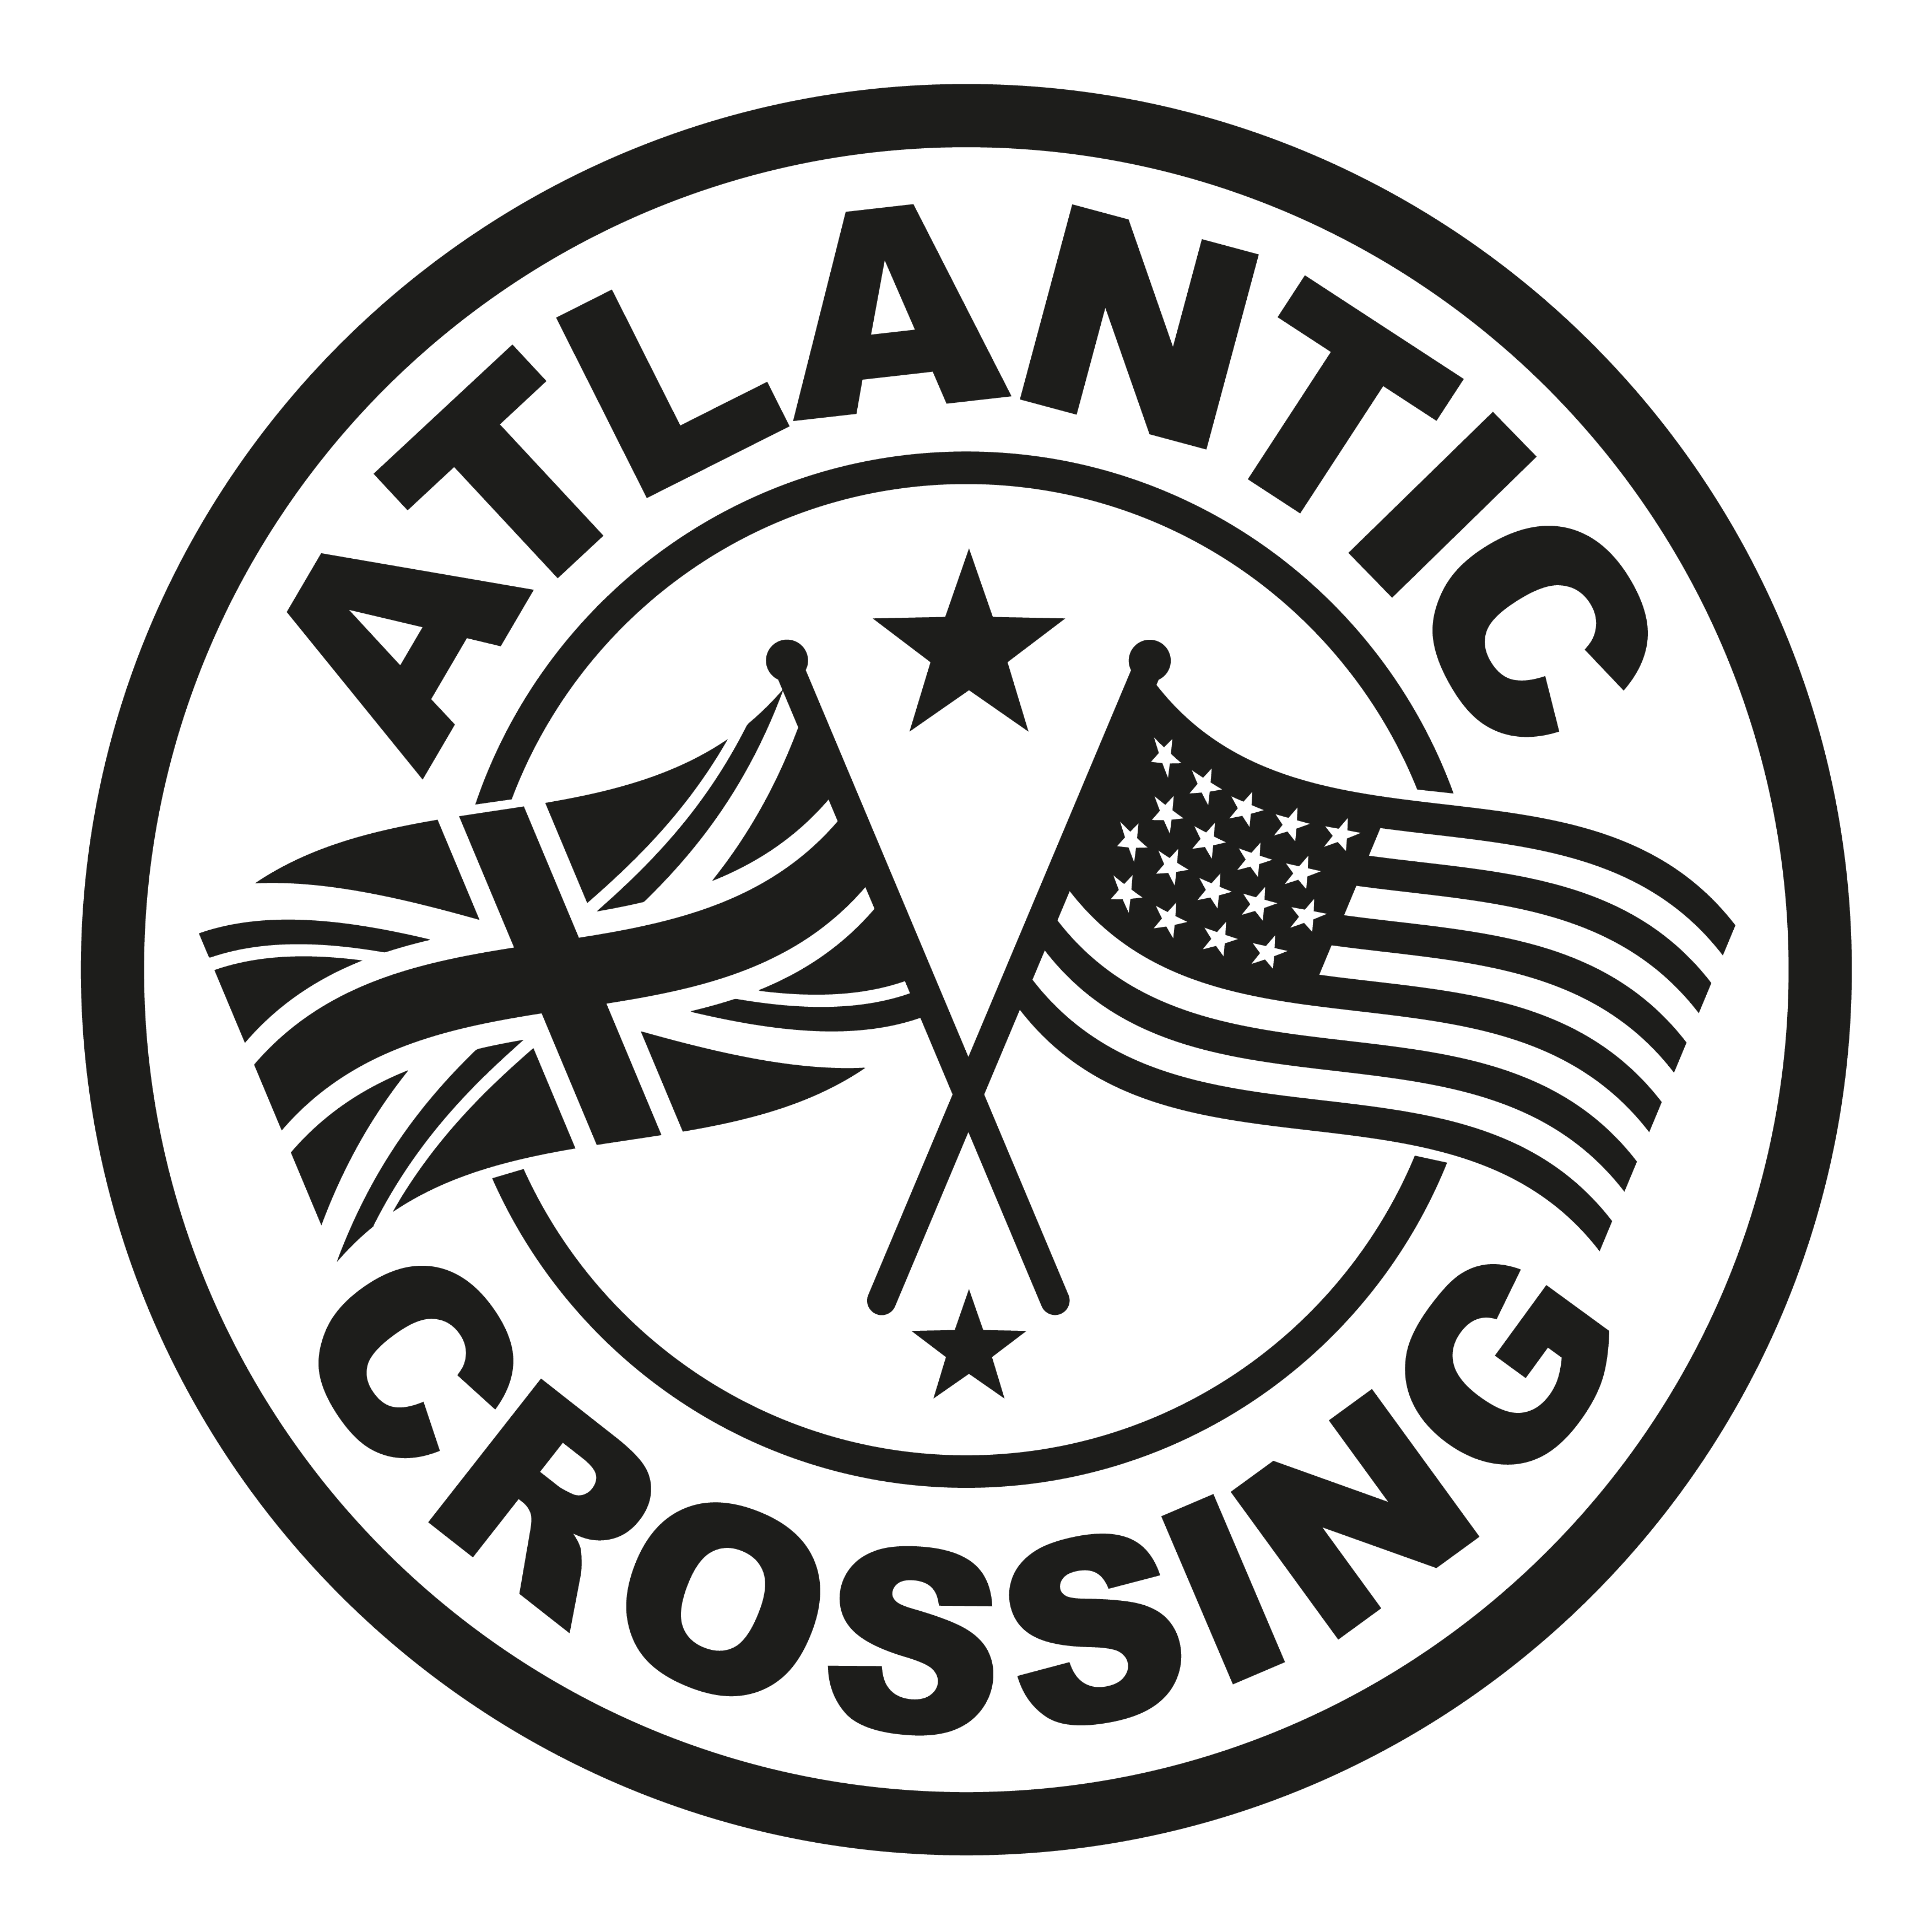 atlantic crossing